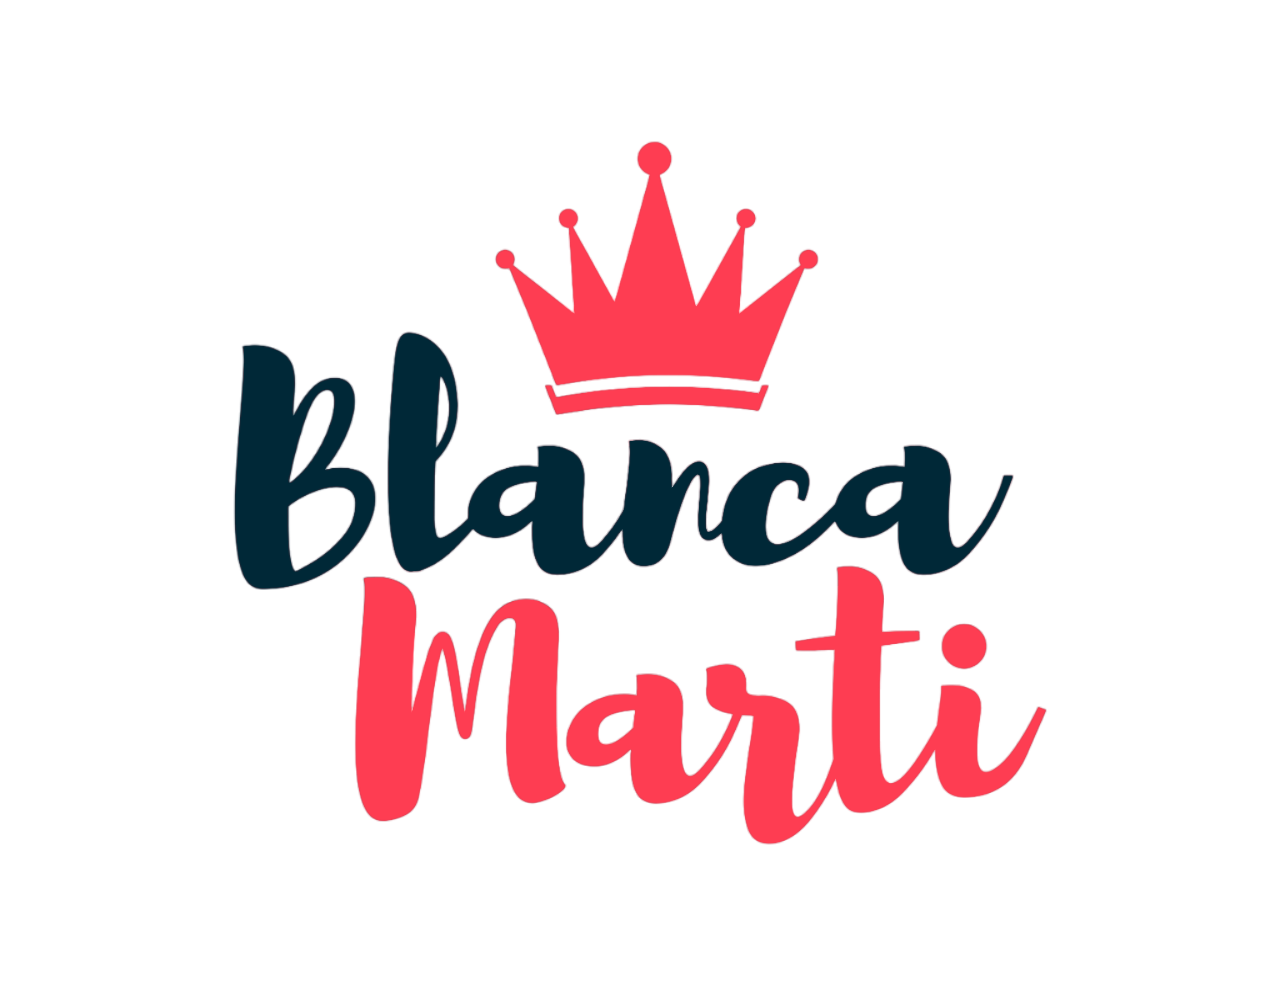 Blanca Marti